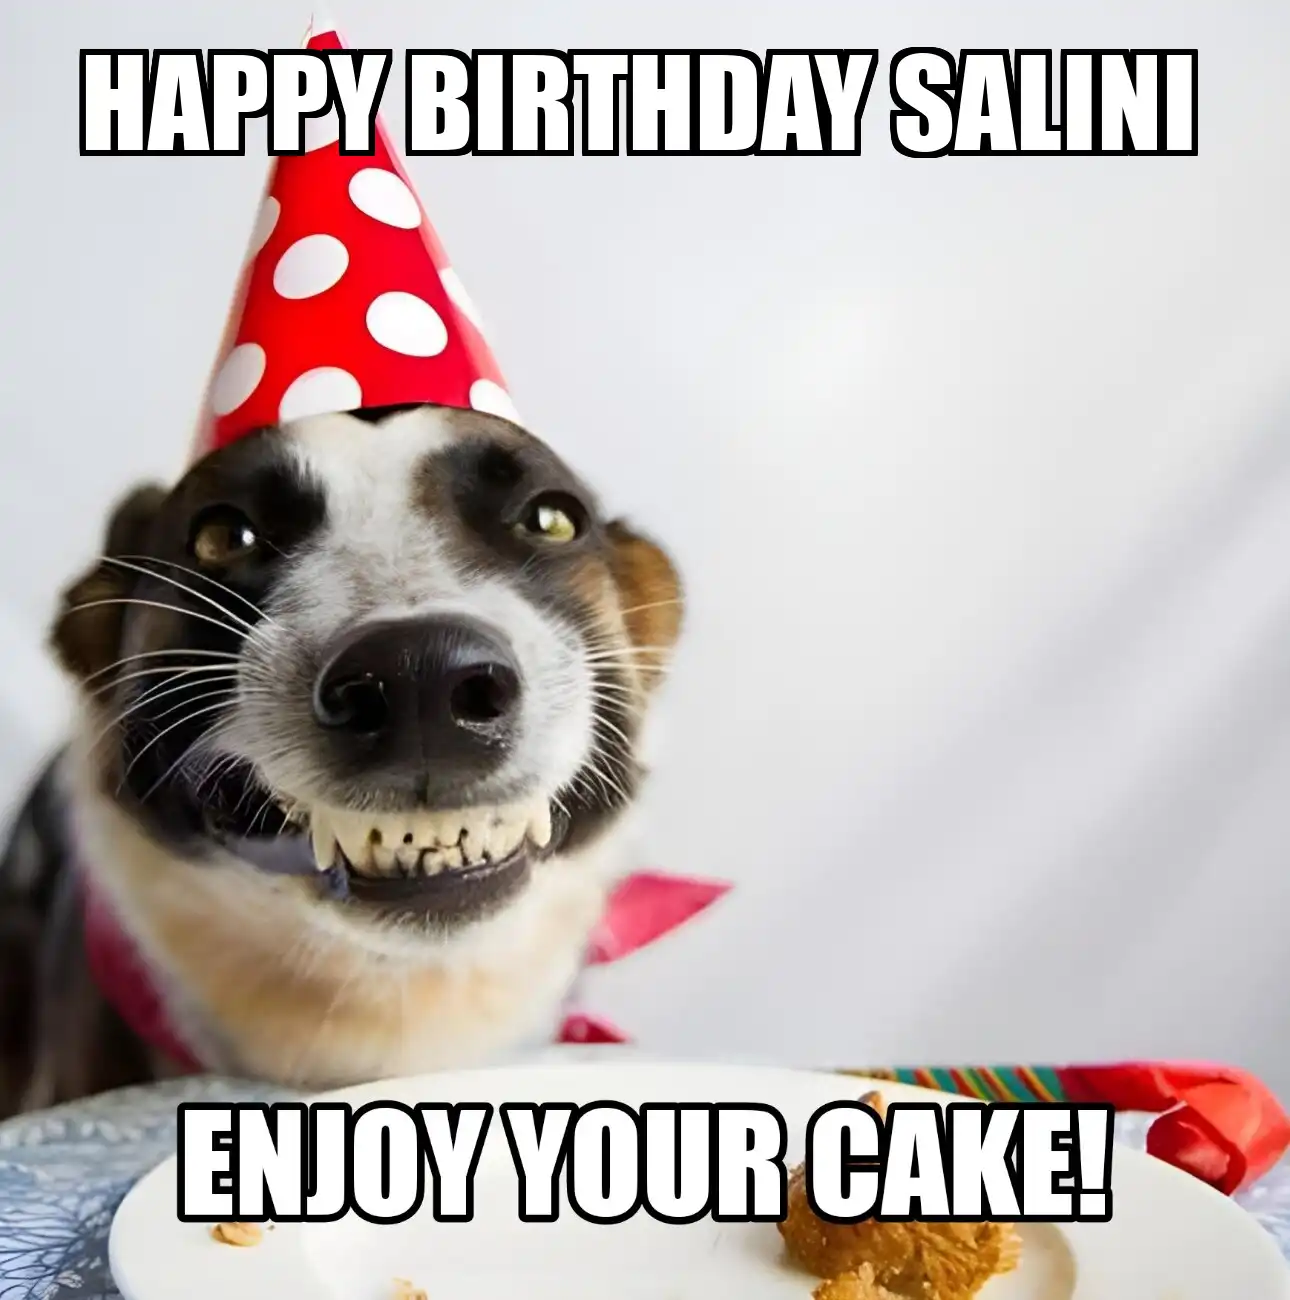 Happy Birthday Salini Enjoy Your Cake Dog Meme